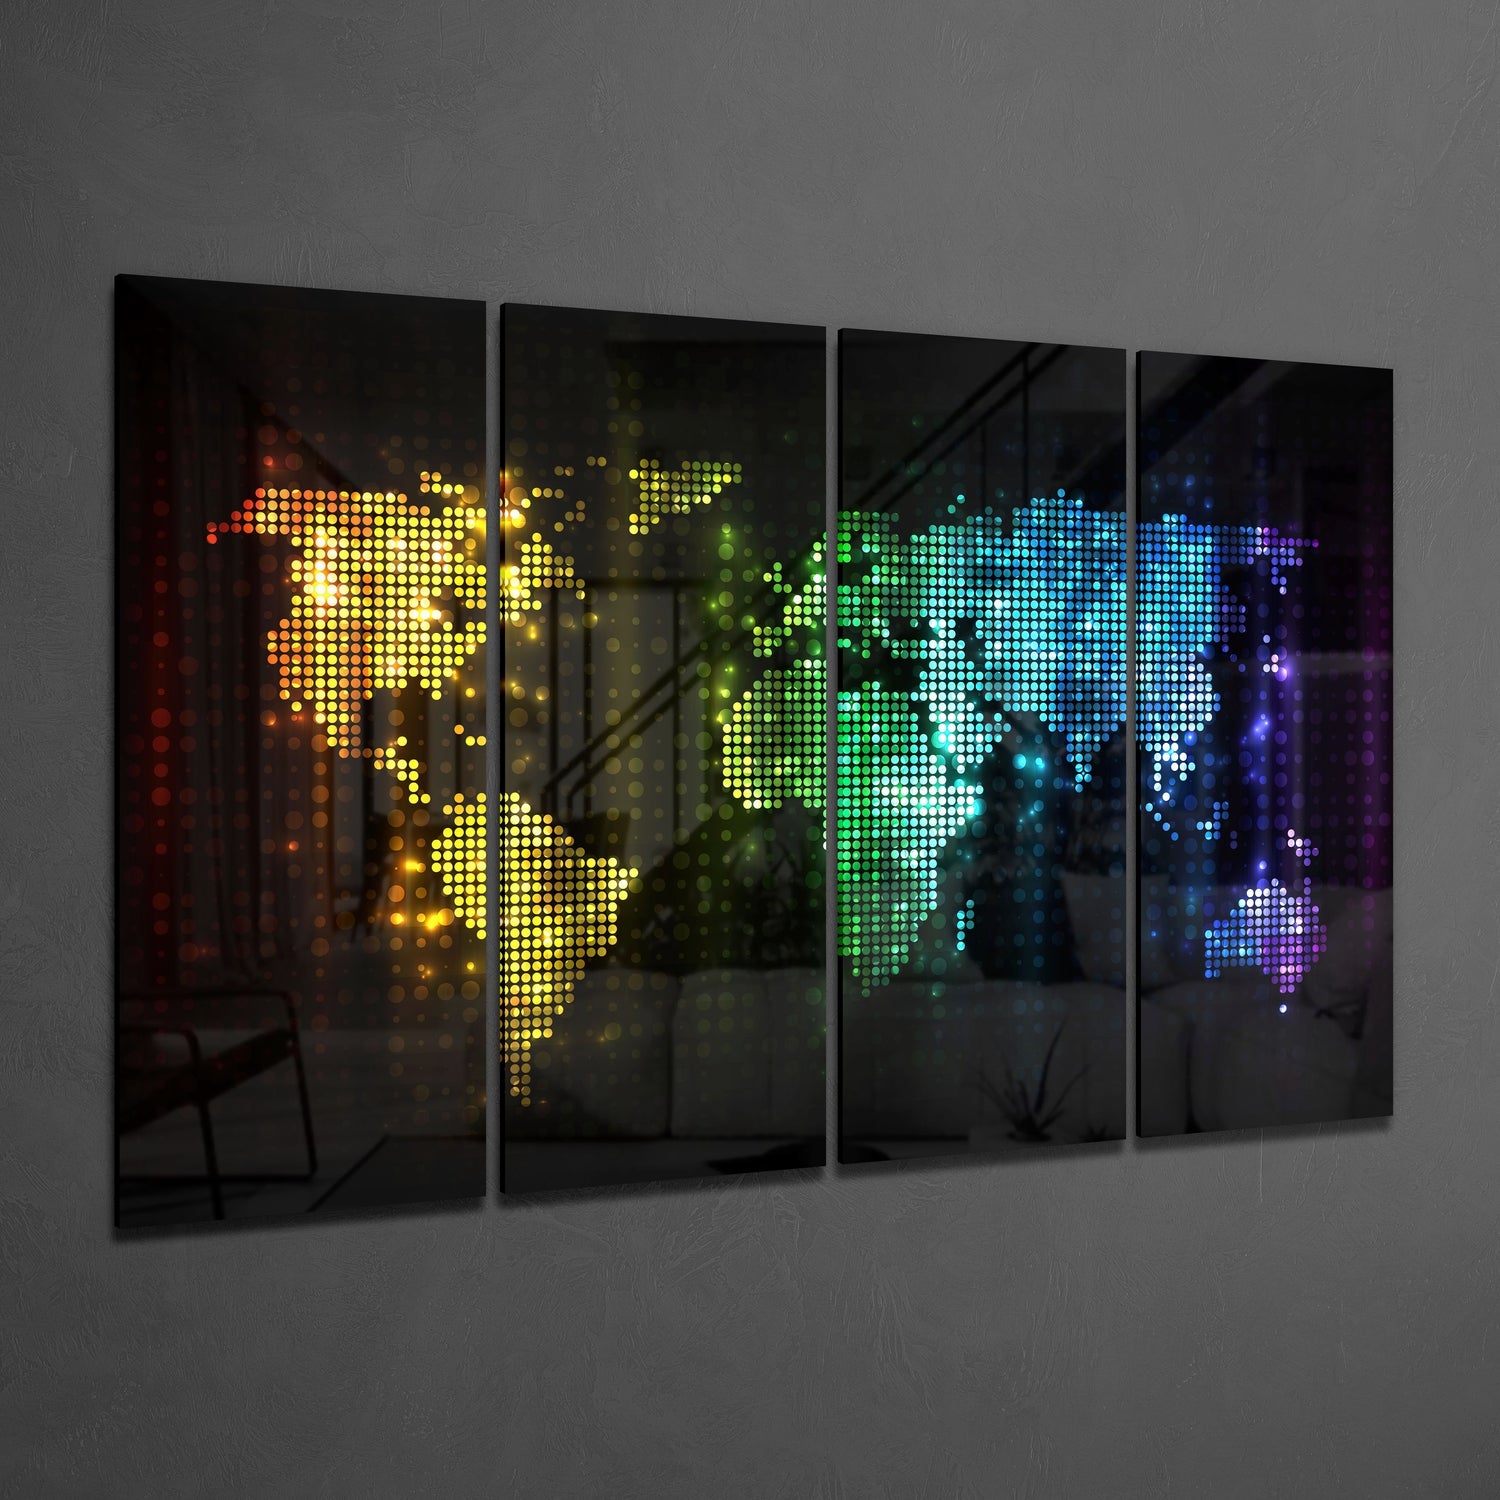 World Map 4 Pieces Mega Glass Wall Art (150x92 cm)